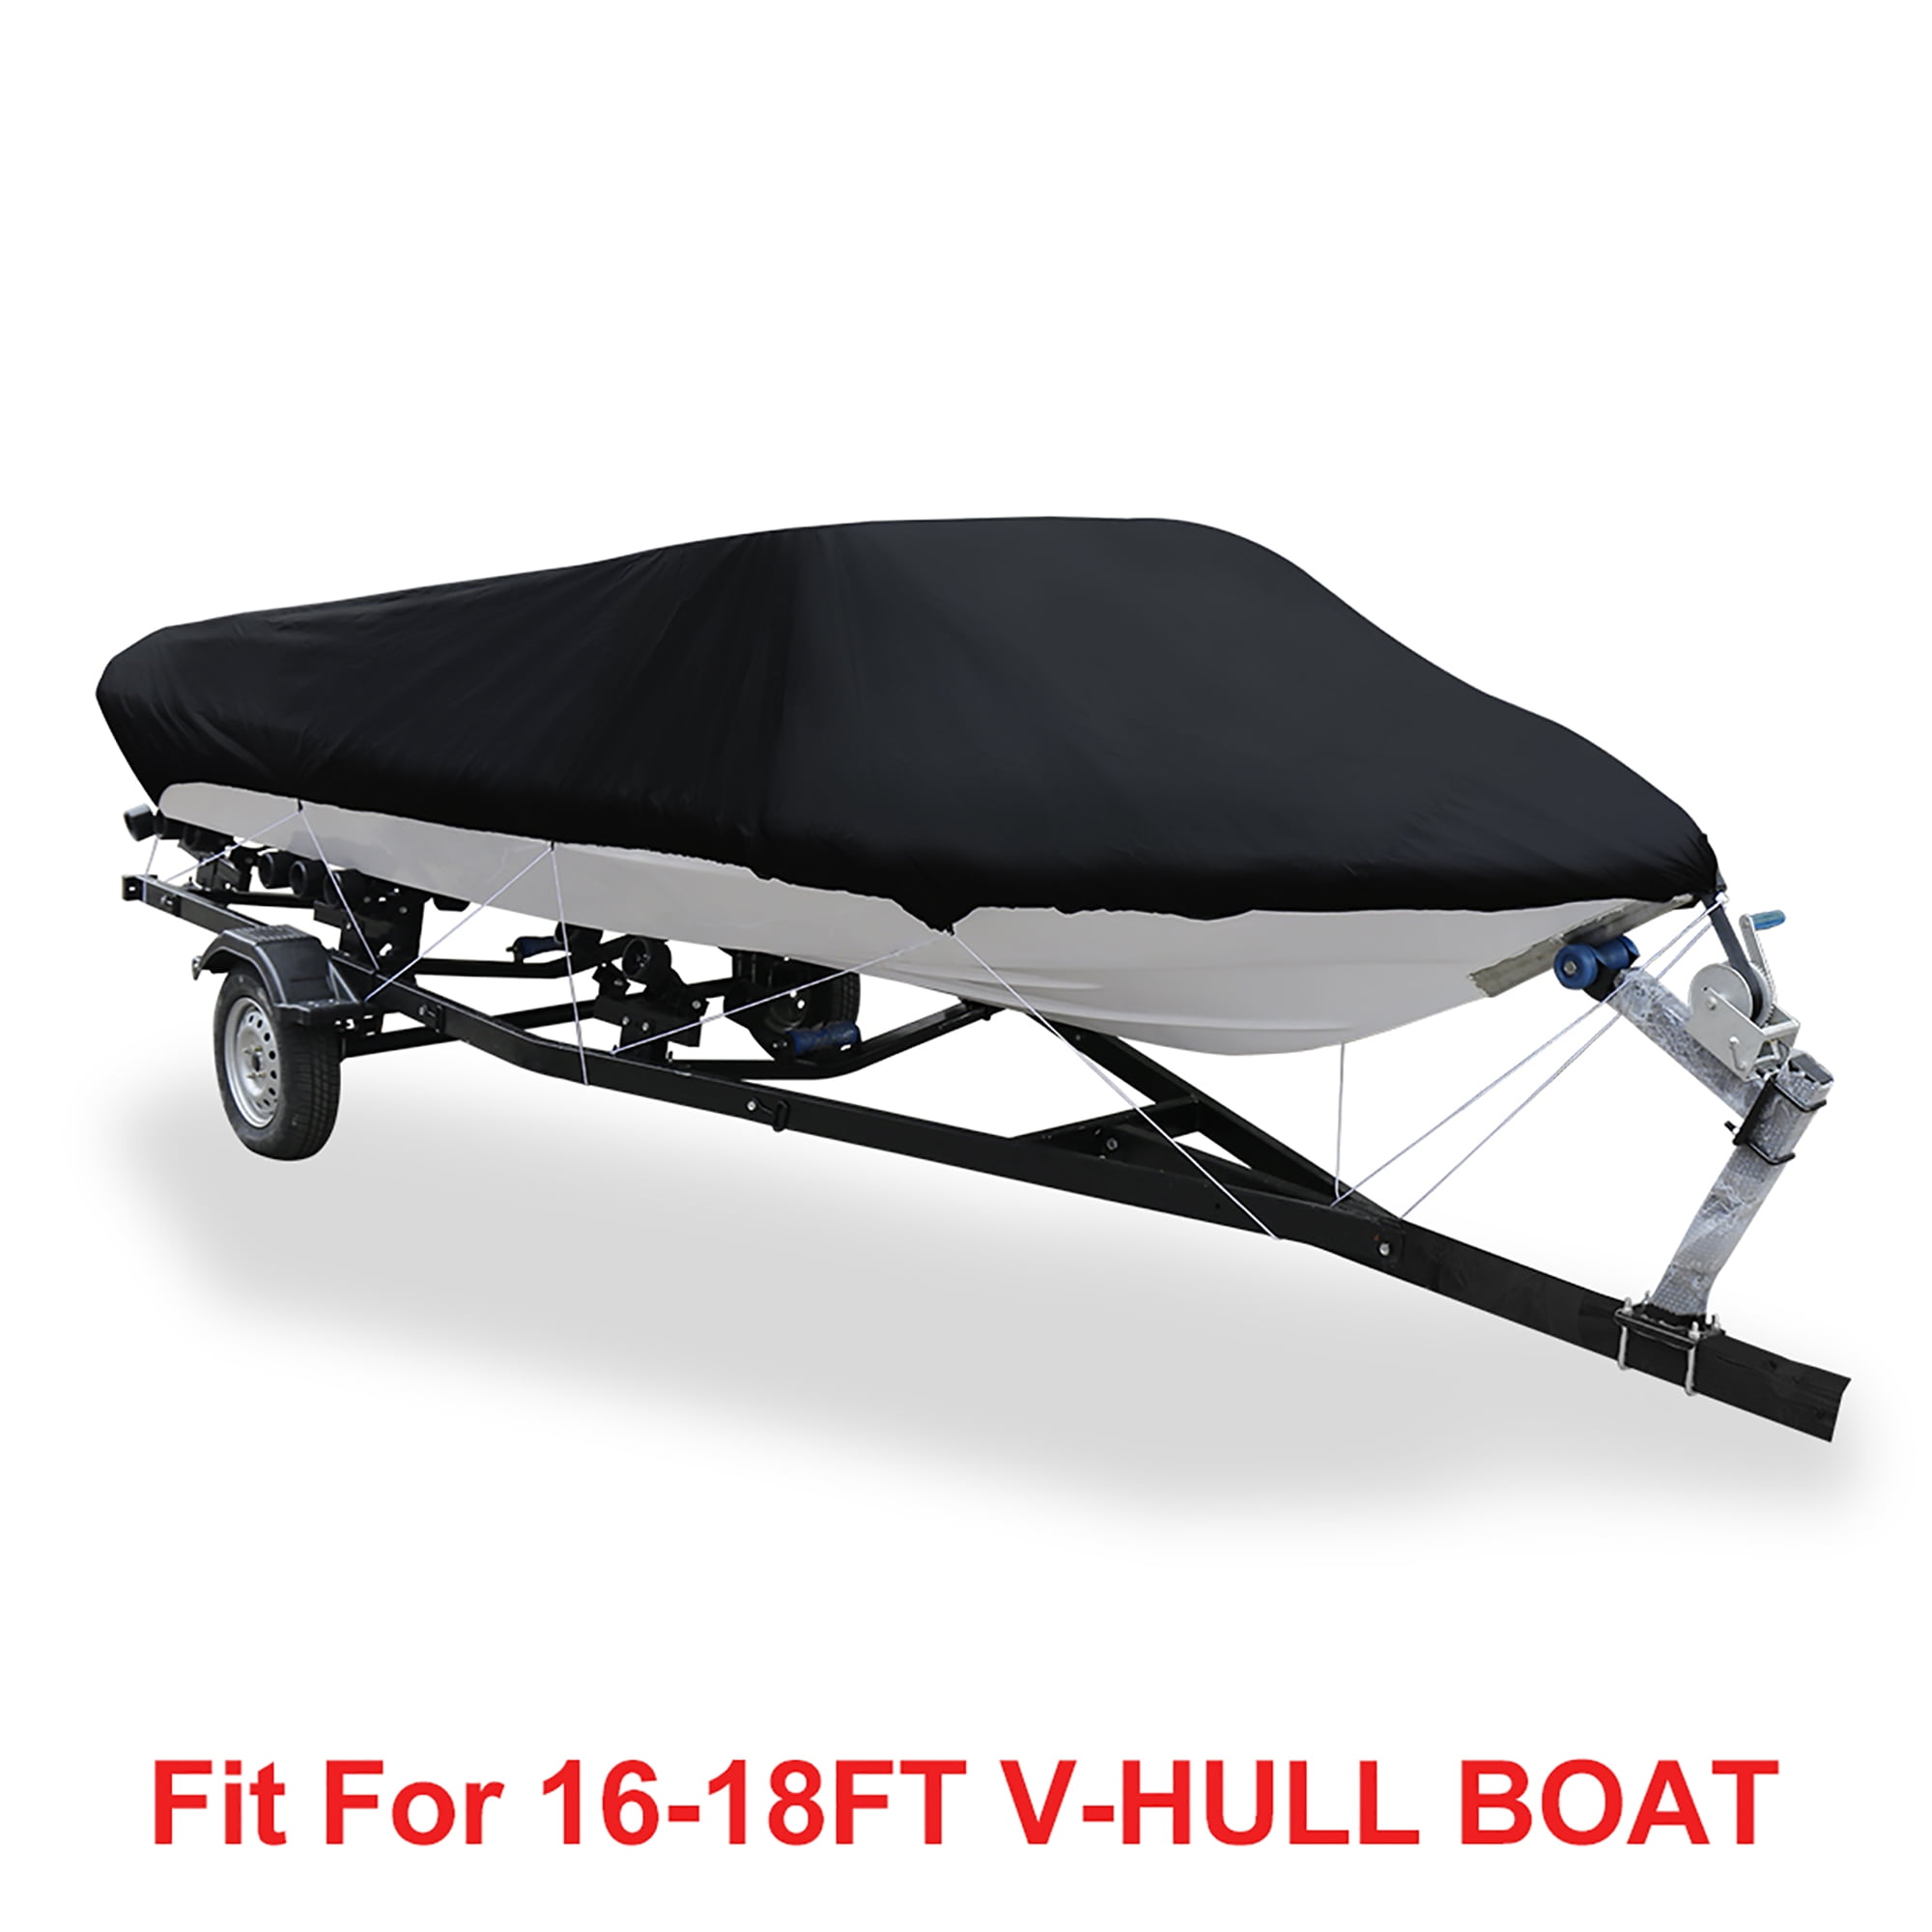 210D Waterproof Trailerable V-Hull Boat Cover, Black 